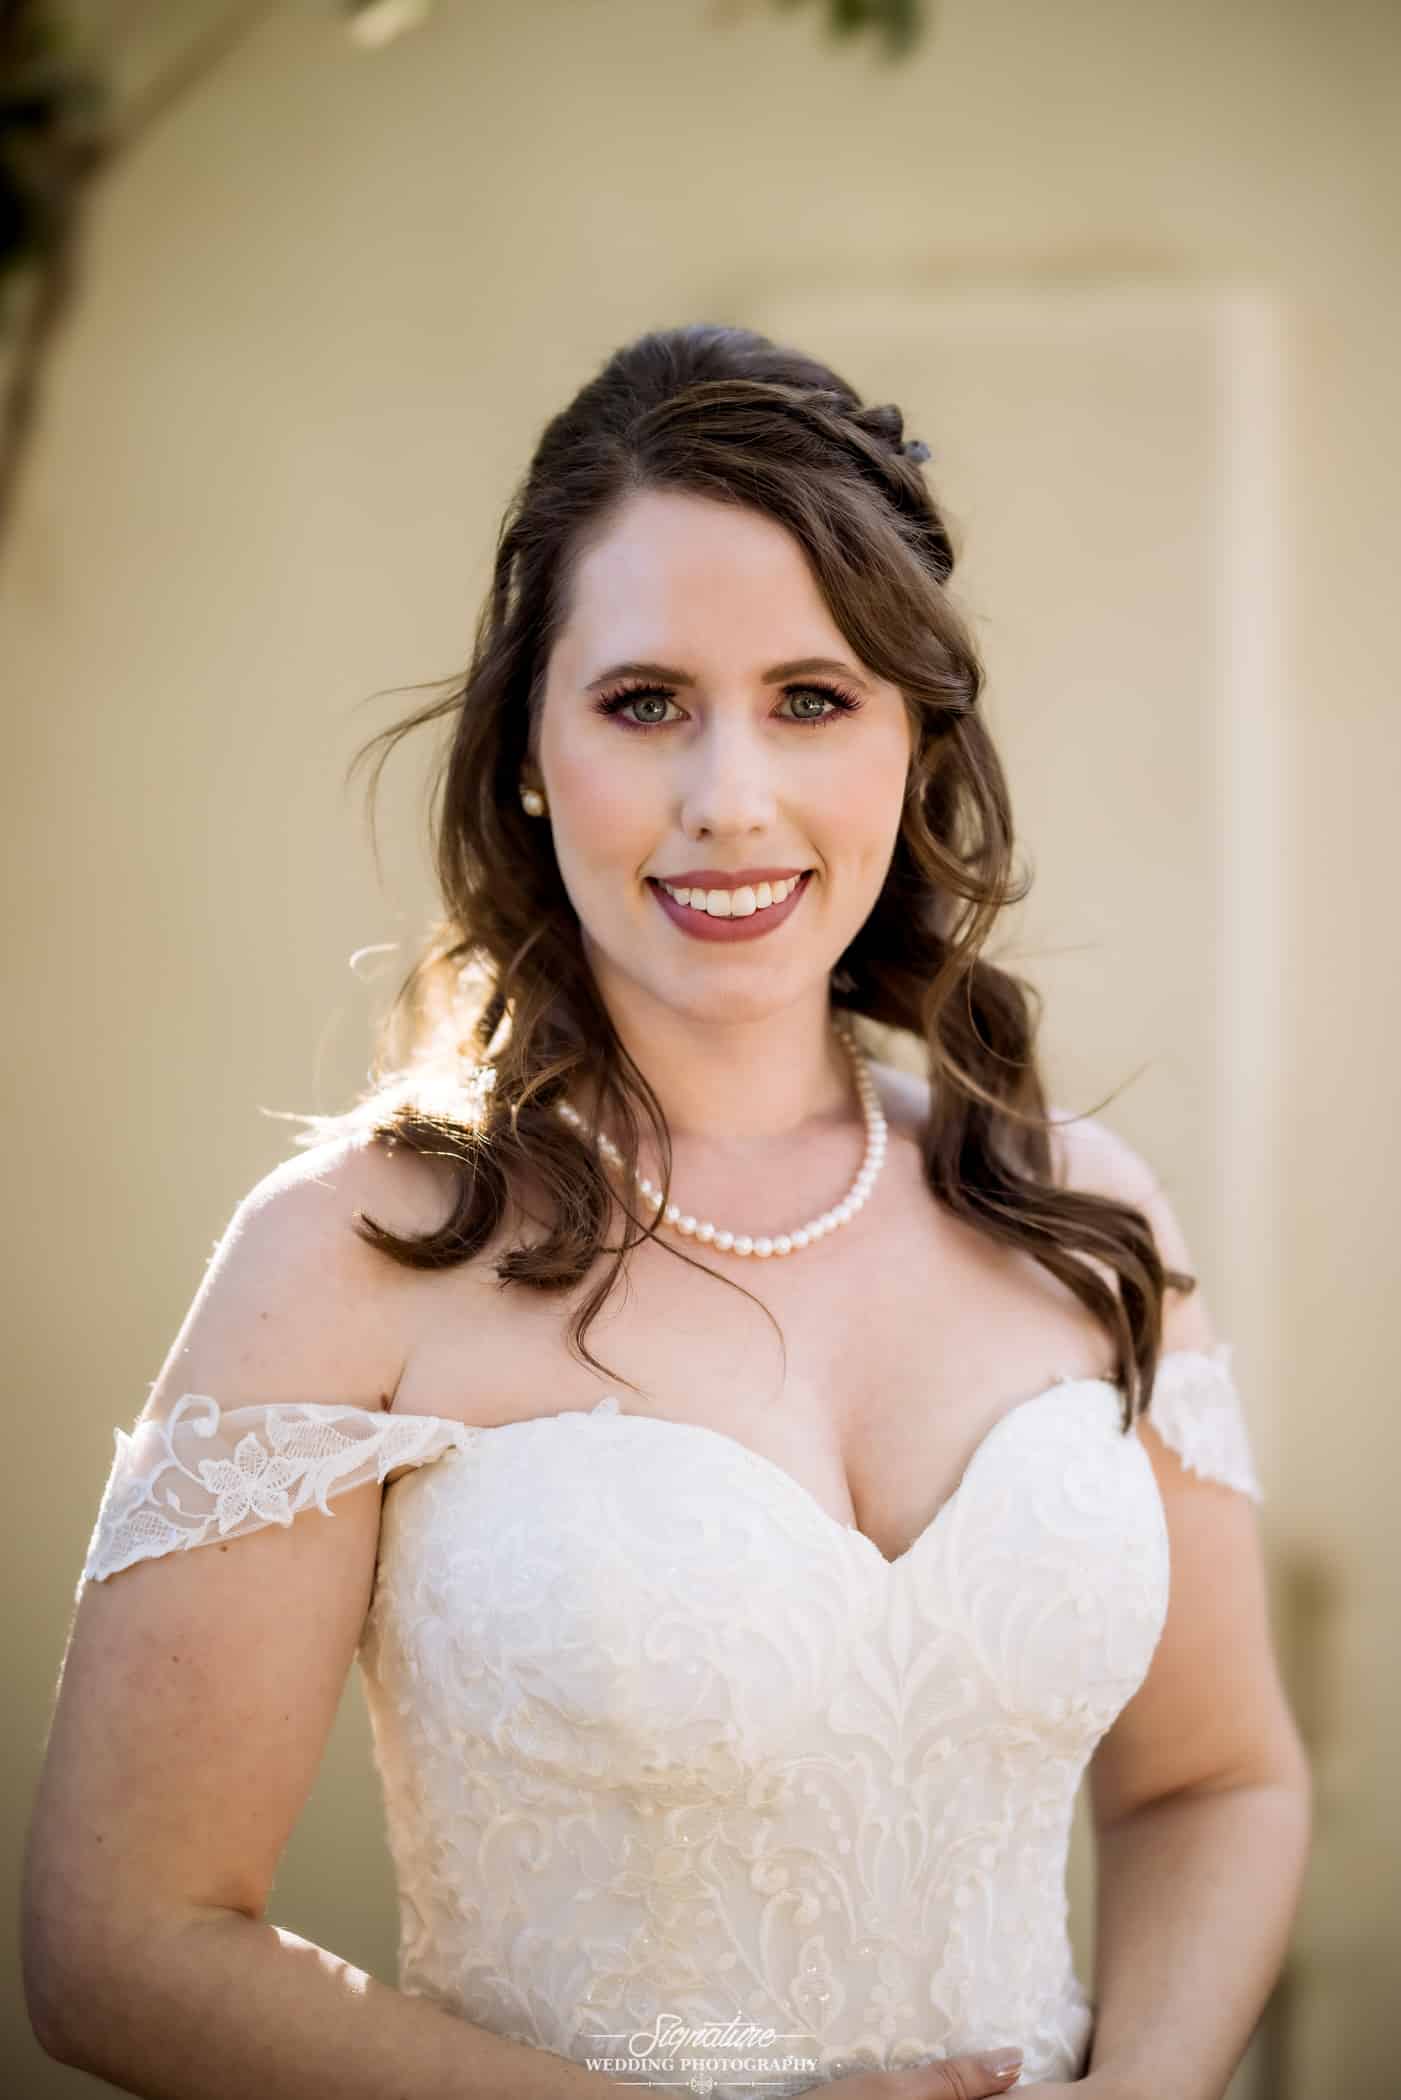 Bride smiling at camera